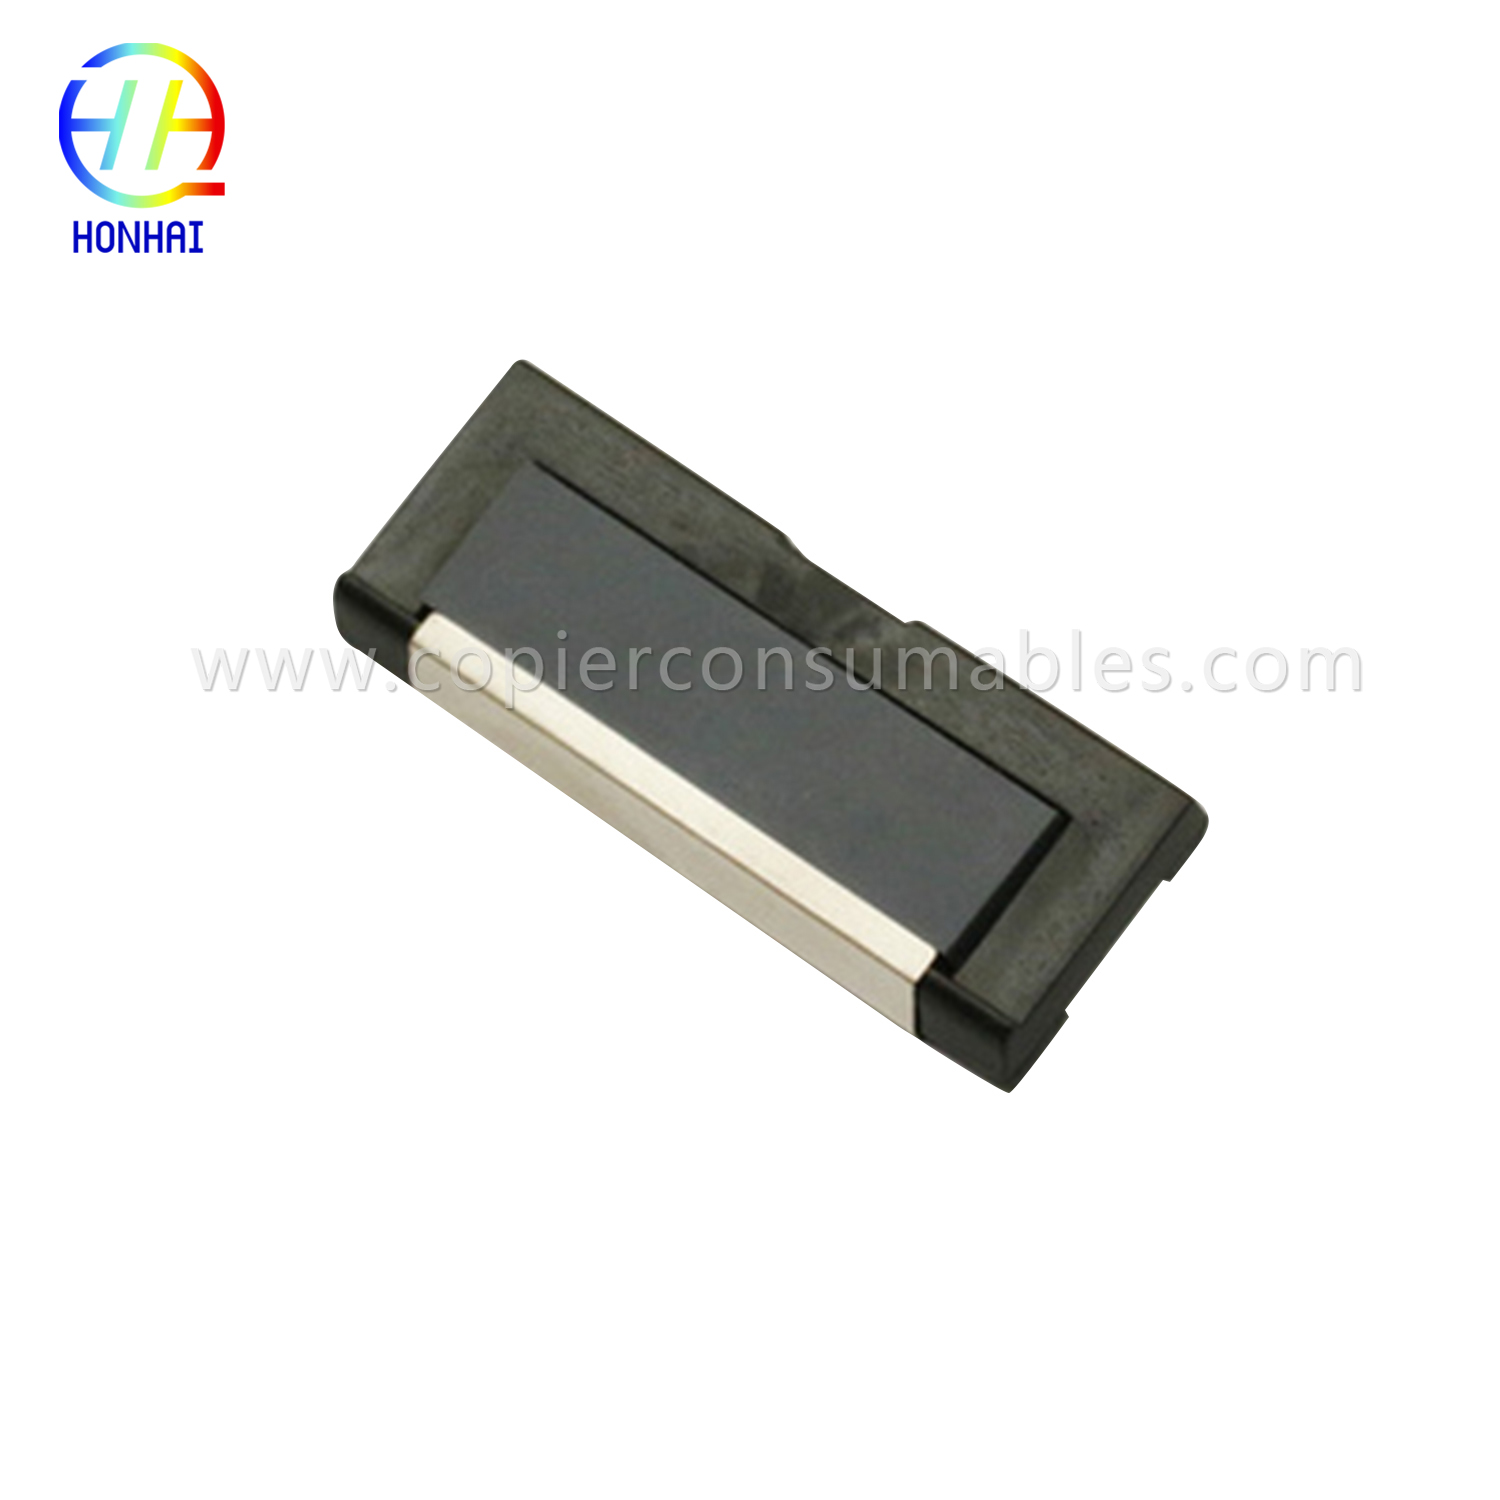 Separation Pad Tray 1 for HP LaserJet 5000 5100 RF5-4119-000